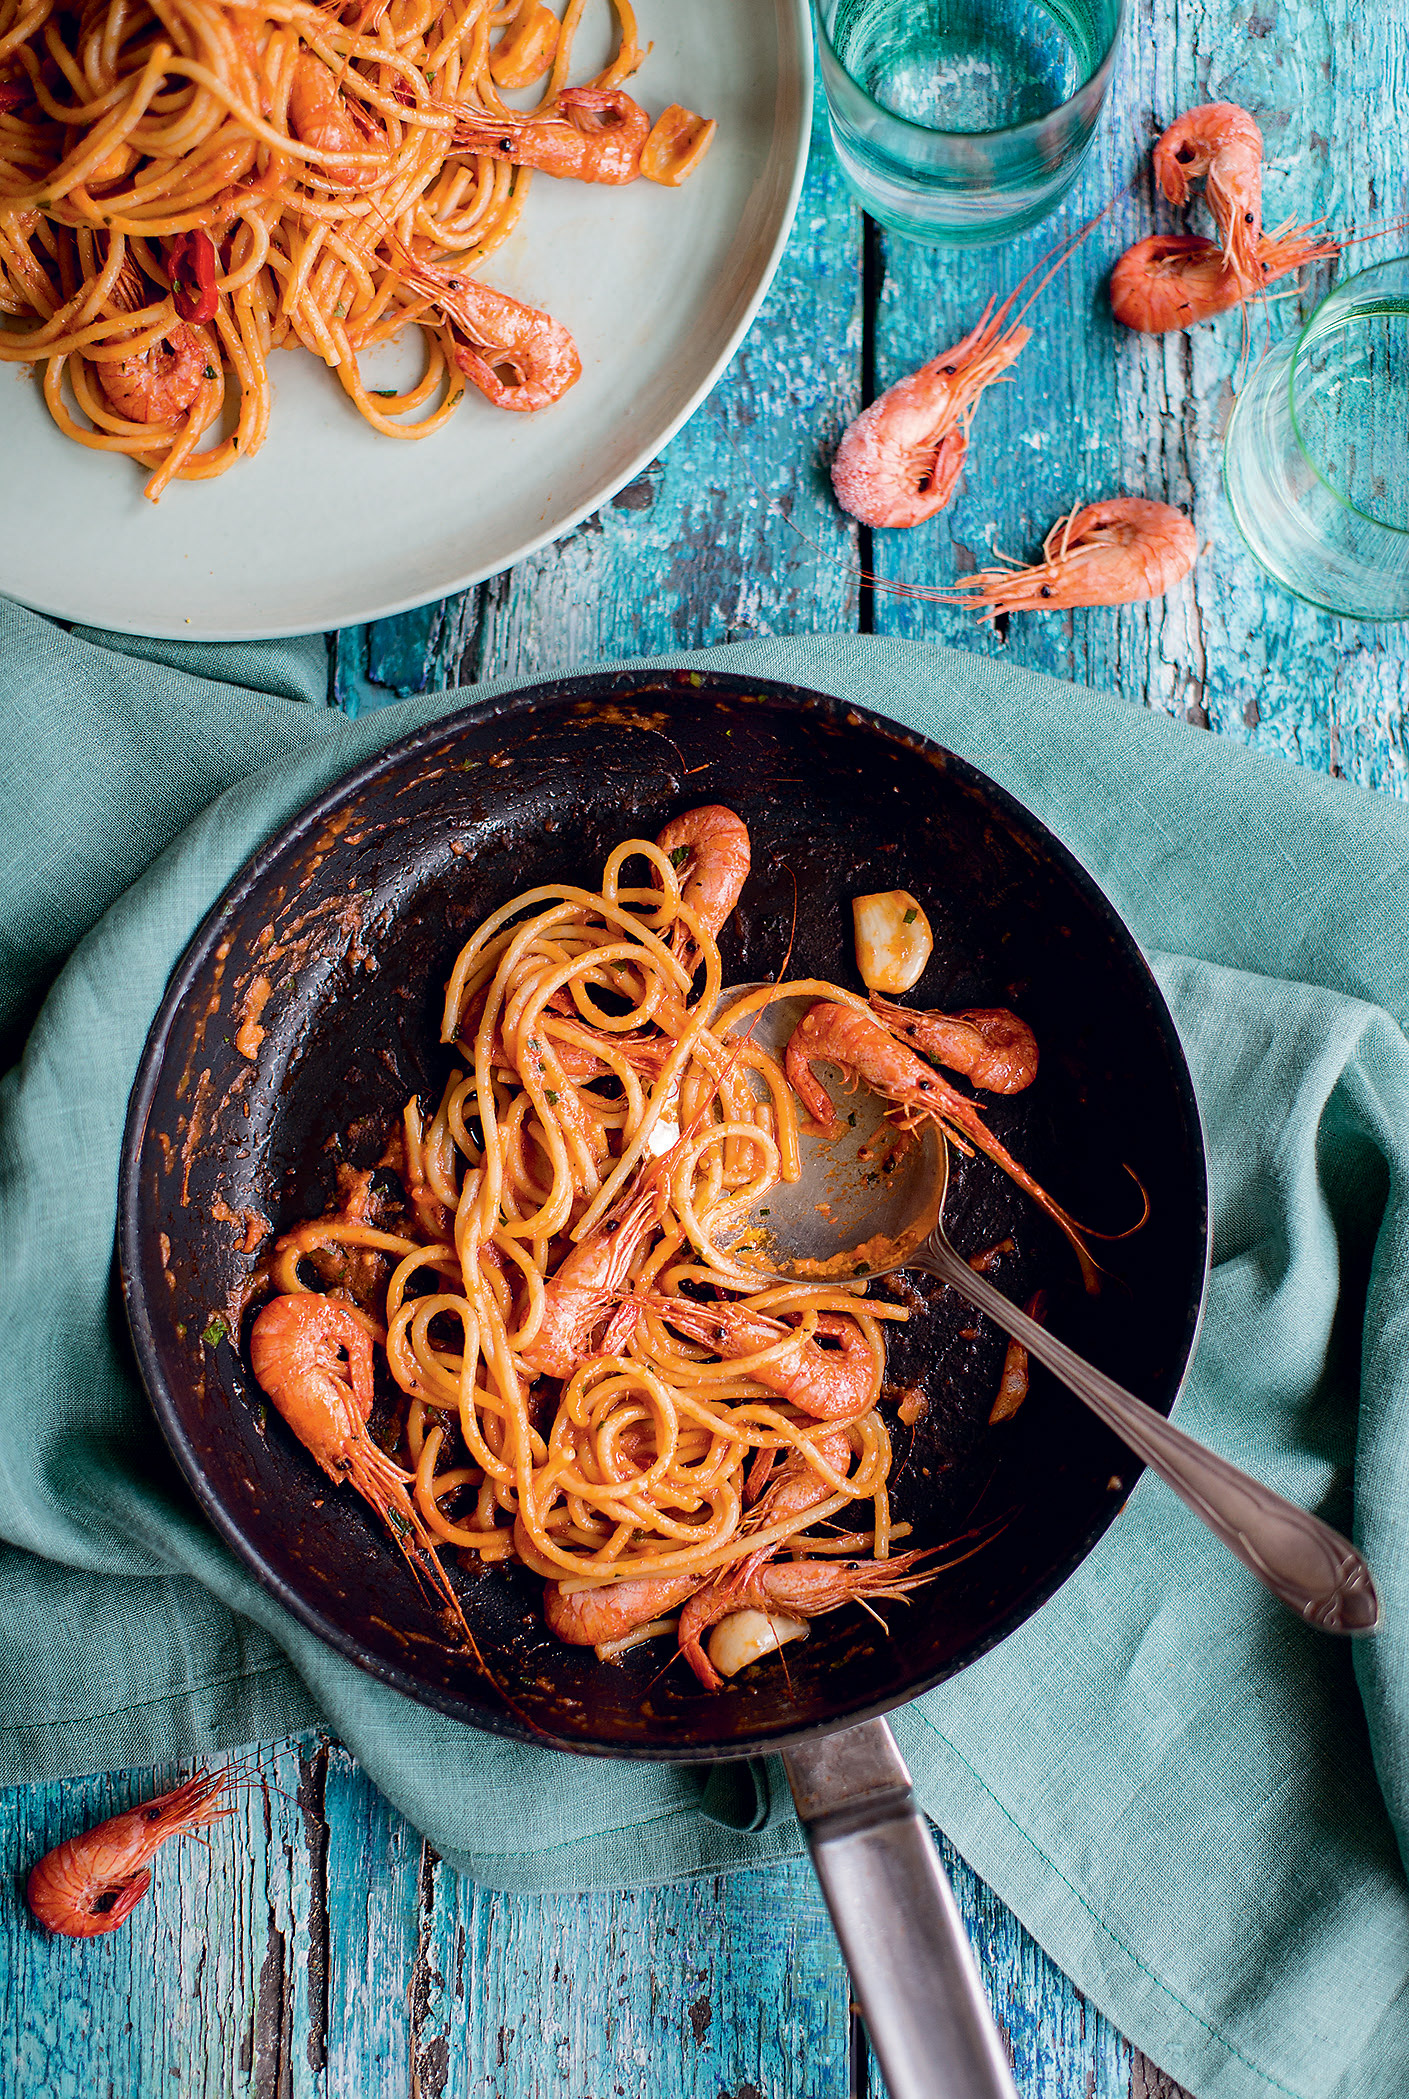 Spaghetti with prawns and tomato